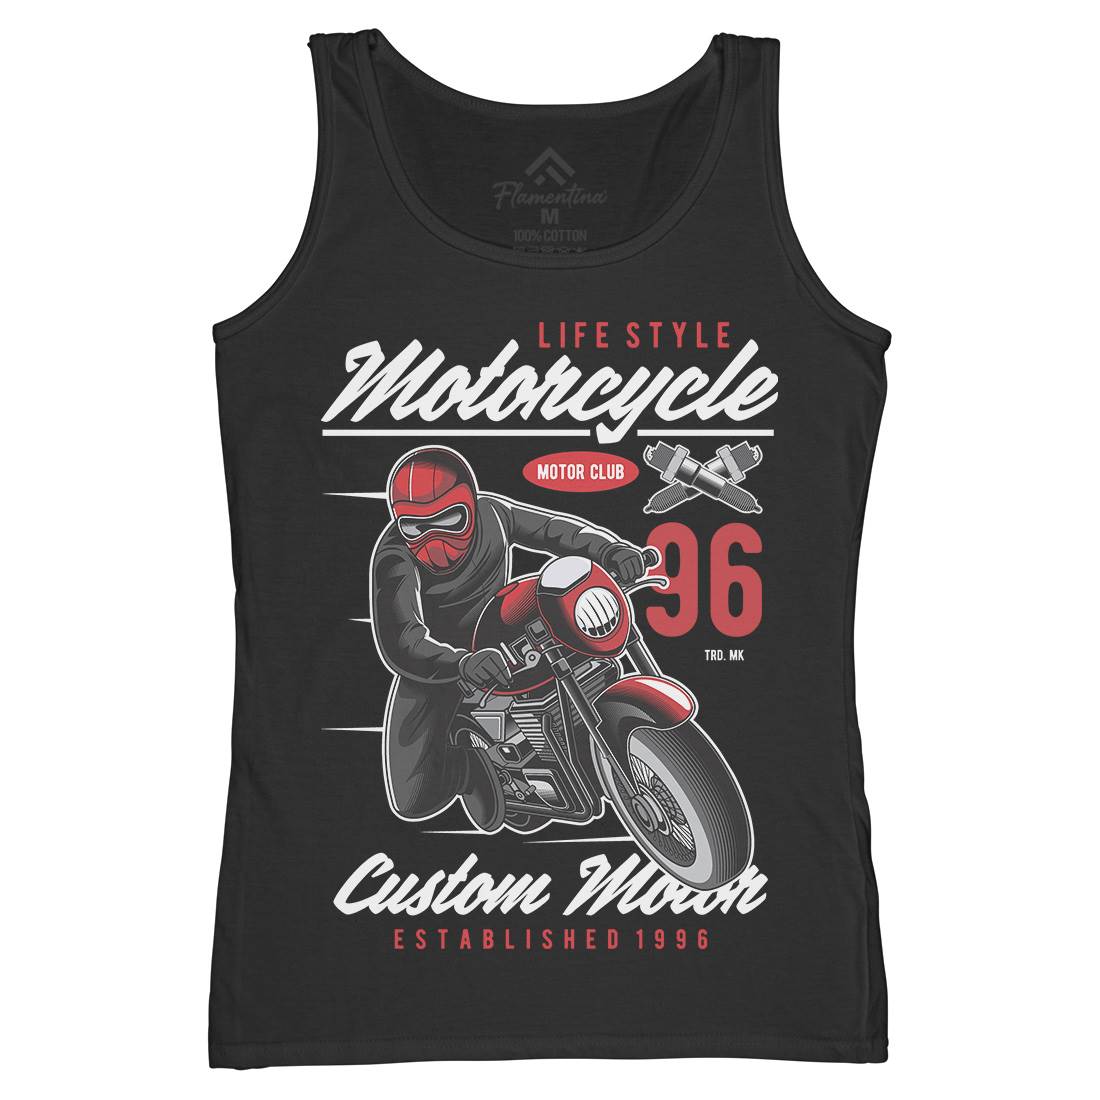 Lifestyle Womens Organic Tank Top Vest Motorcycles C399